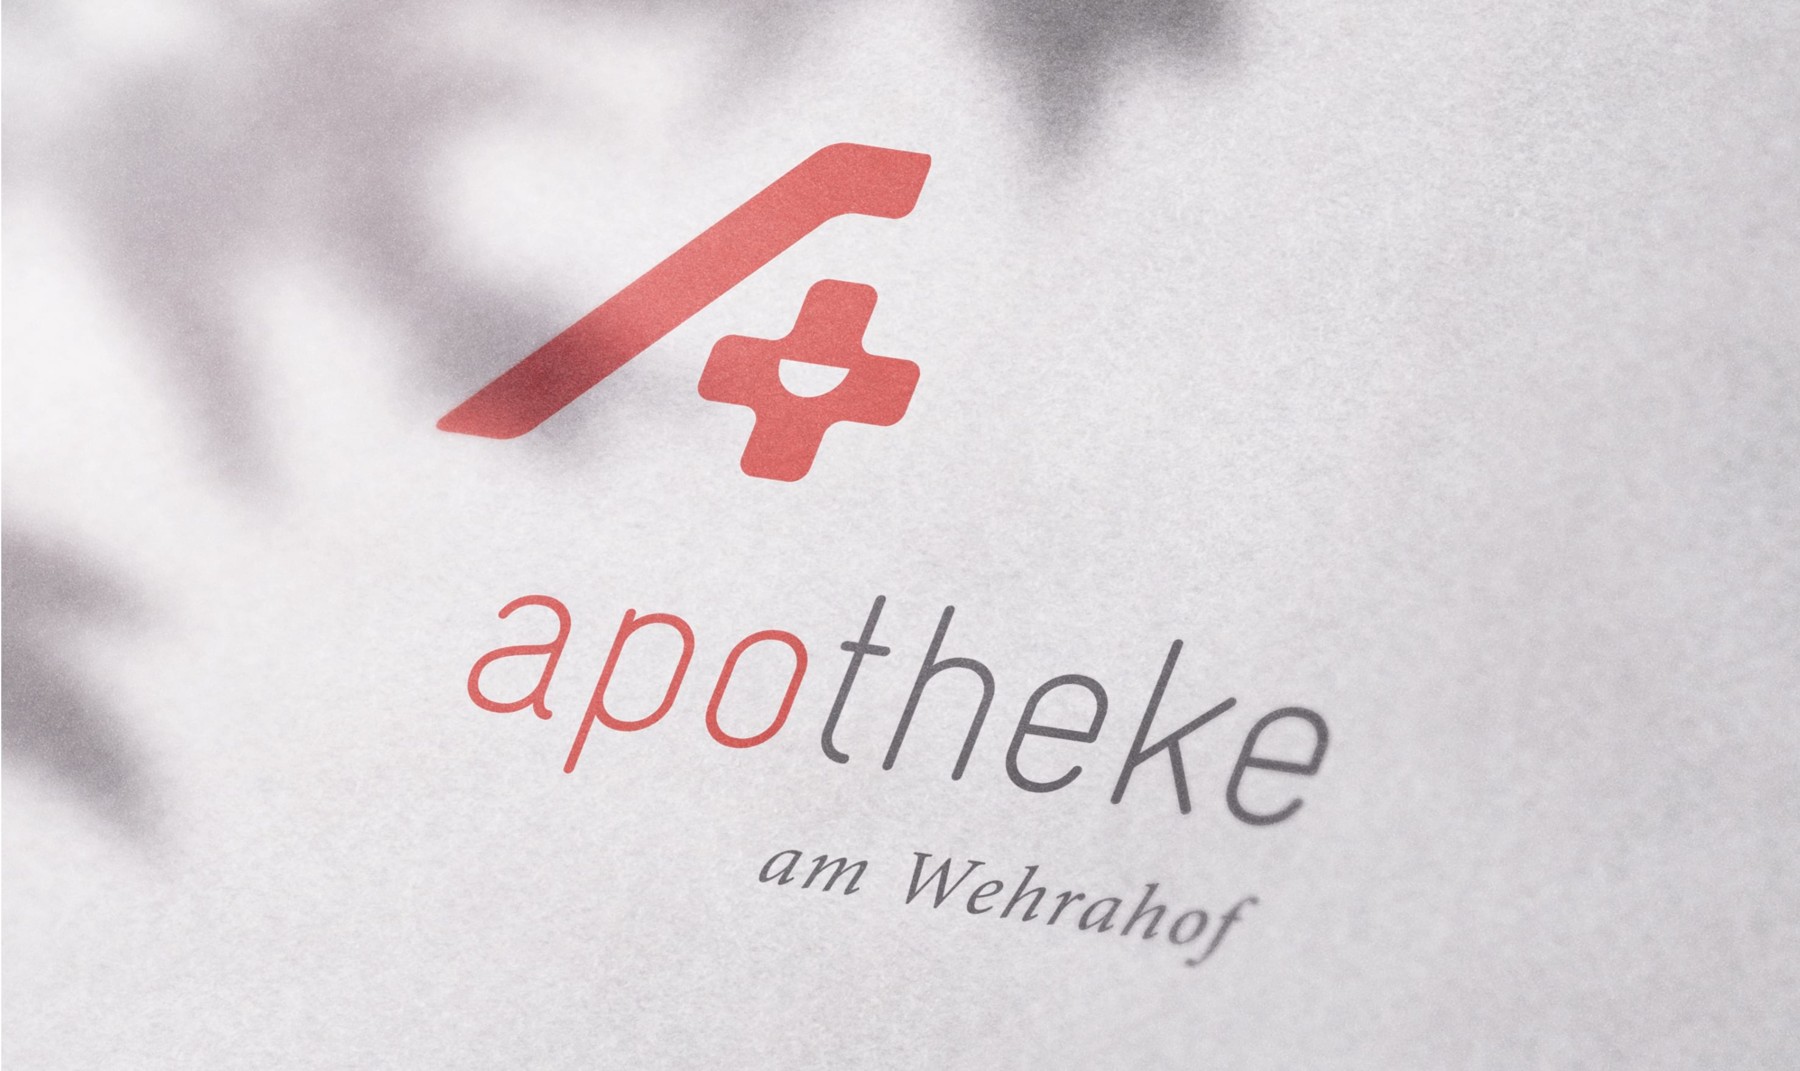 VetApotheke - Logo